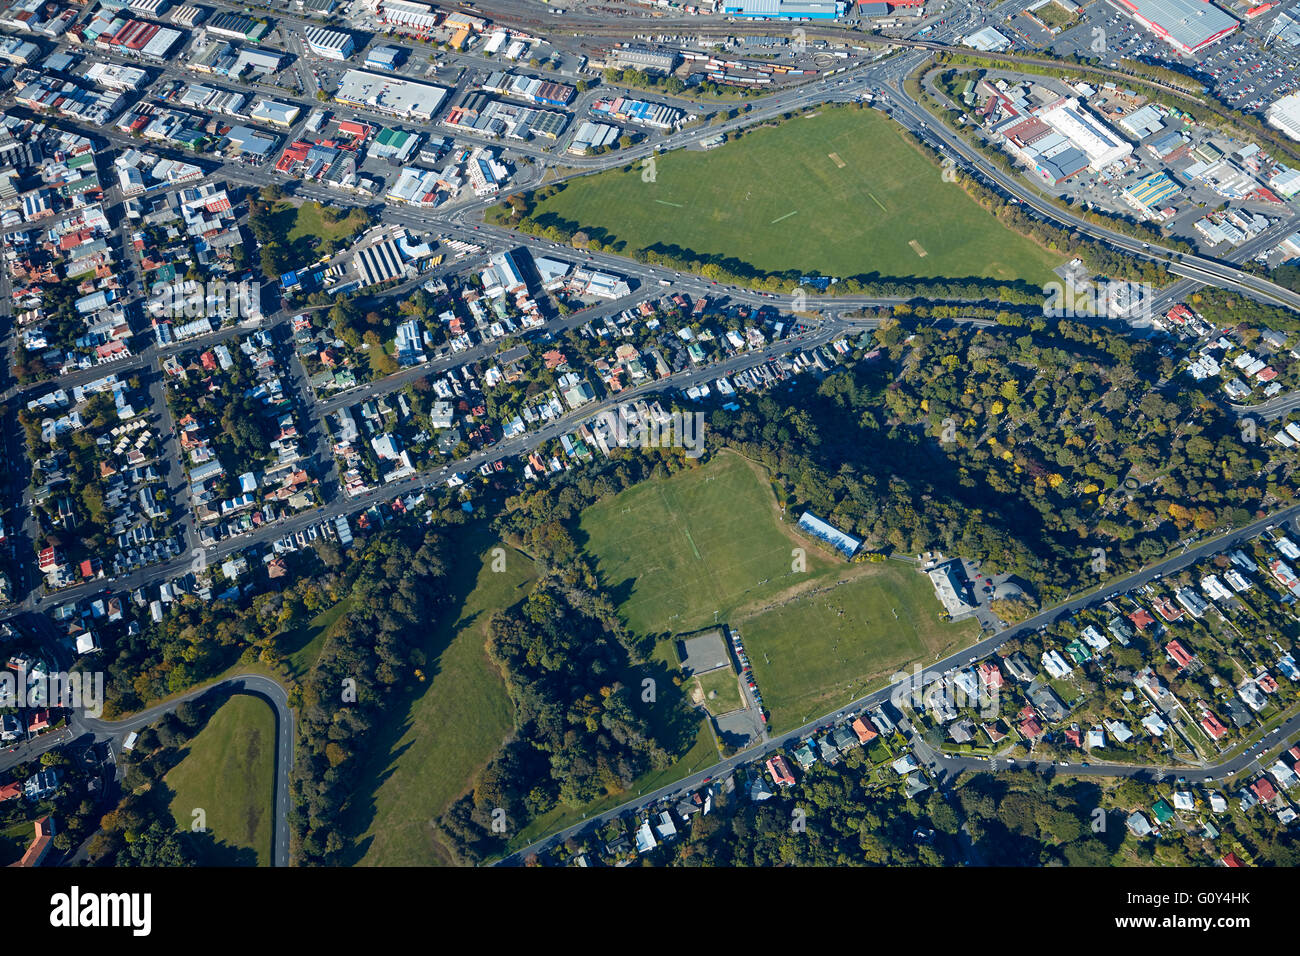 Zingari Richmond Rugby Club and The Oval, Dunedin, Otago, South Island, New Zealand - aerial Stock Photo